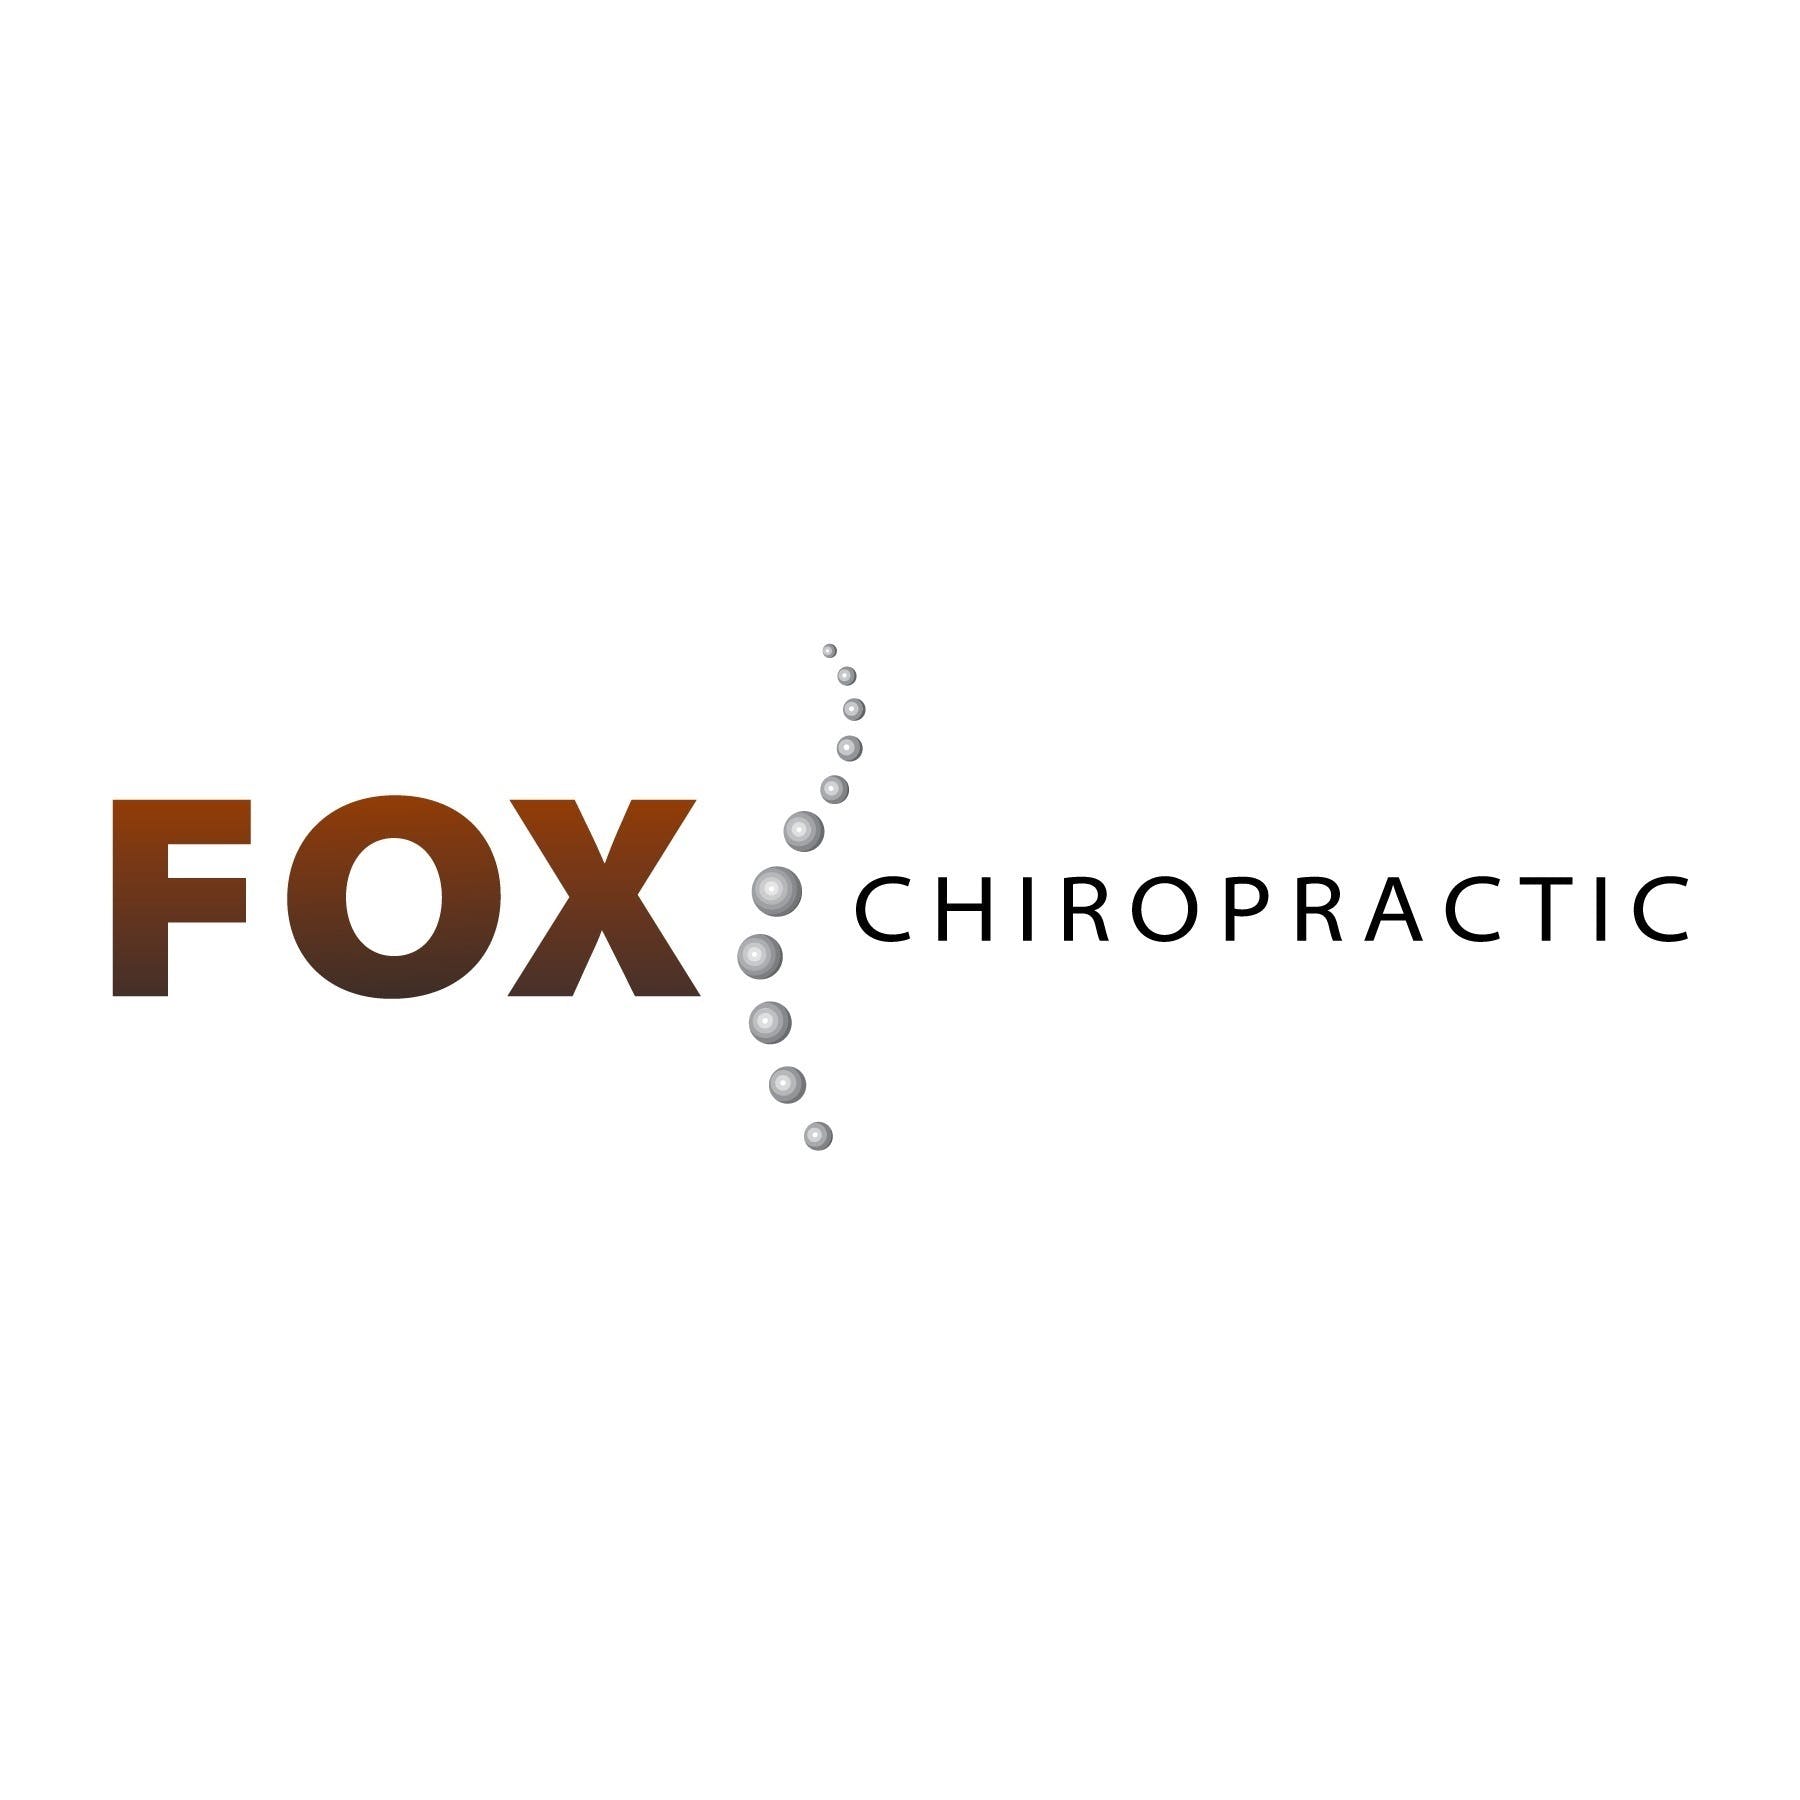 Fox Chiropractic - Medical Marijuana Doctors - Cannabizme.com